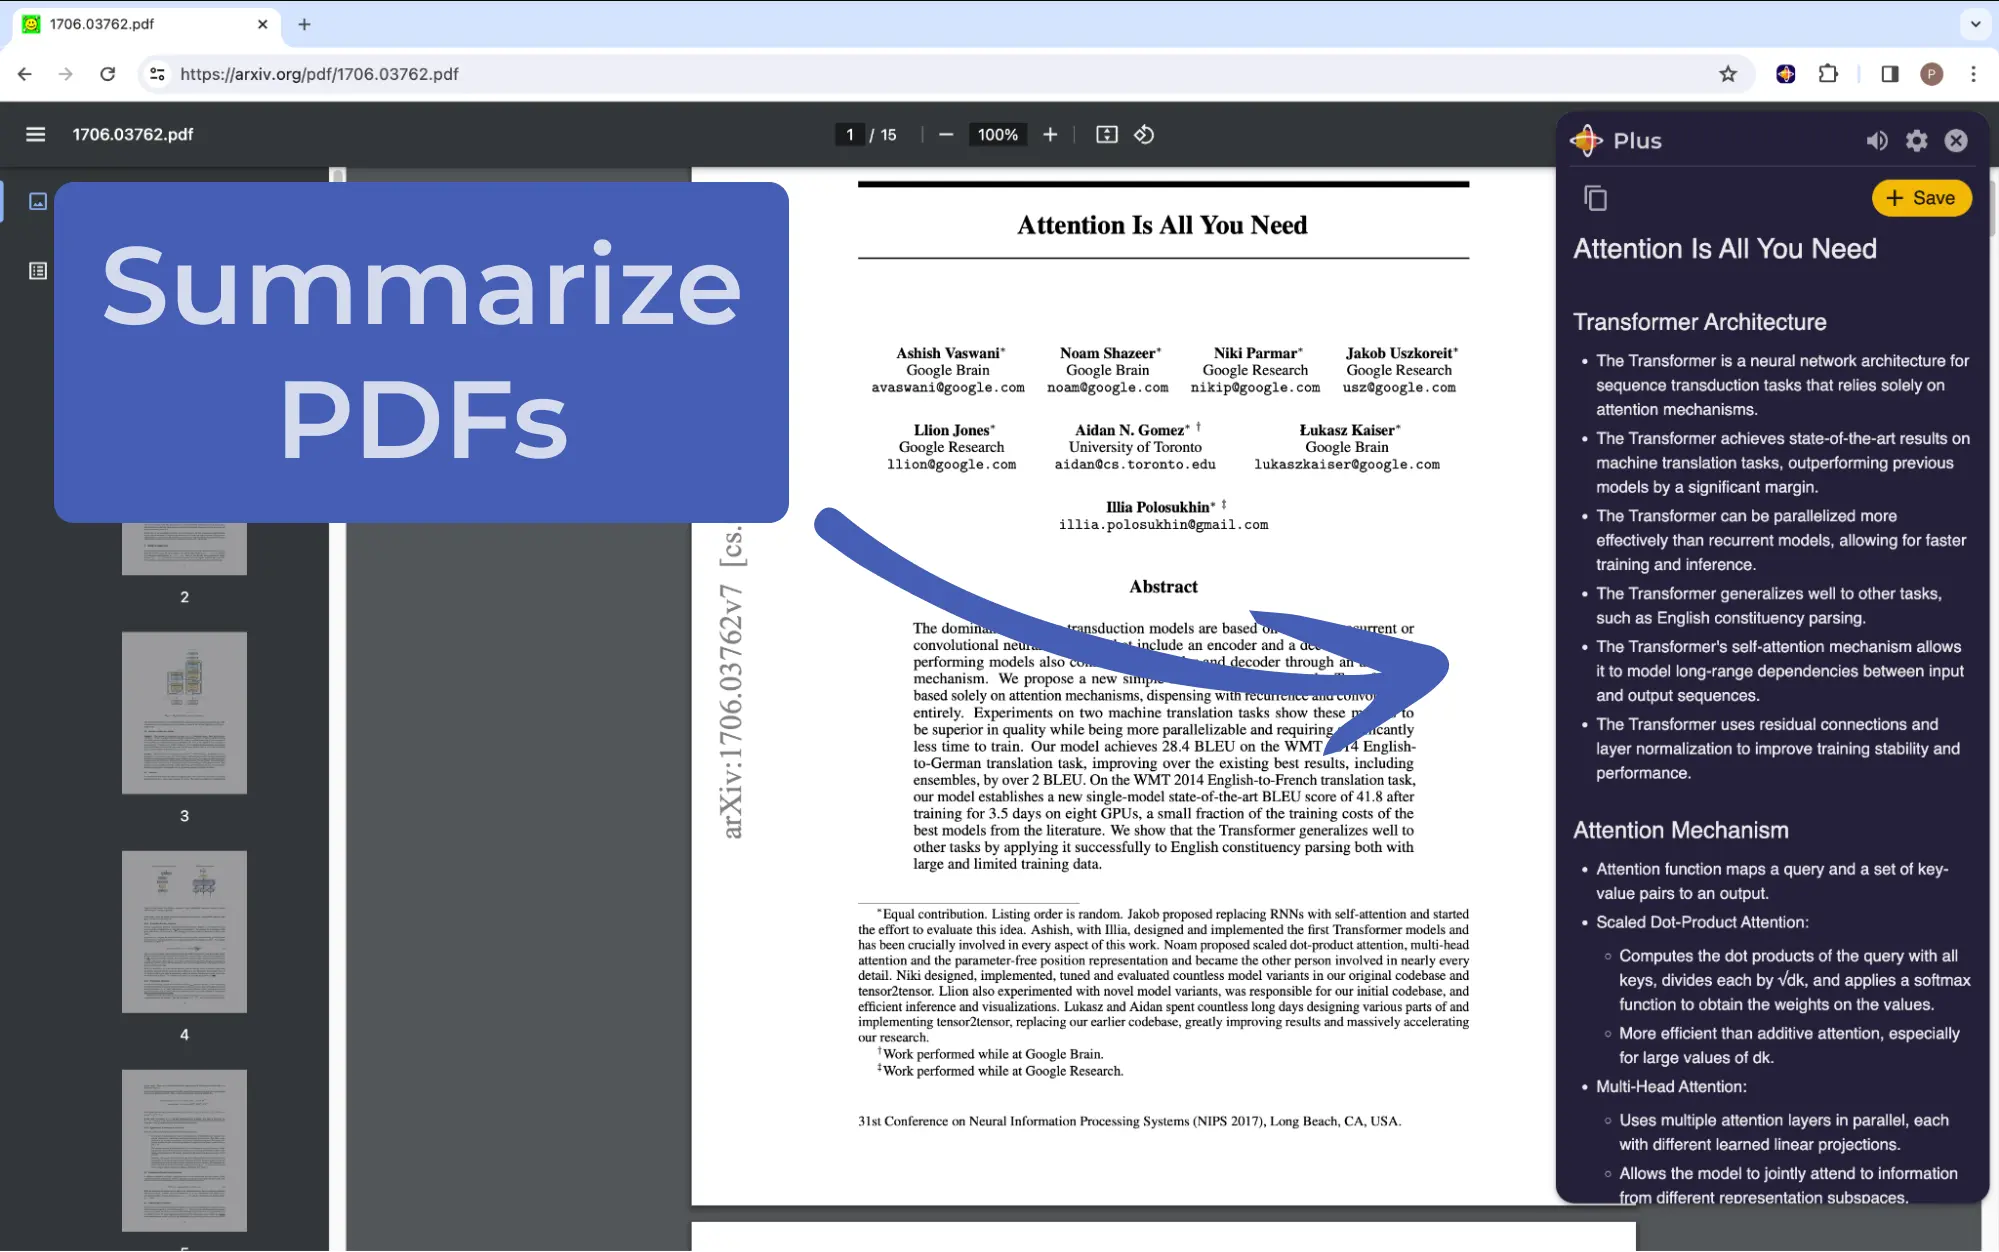 How to use AI to summarize PDFs